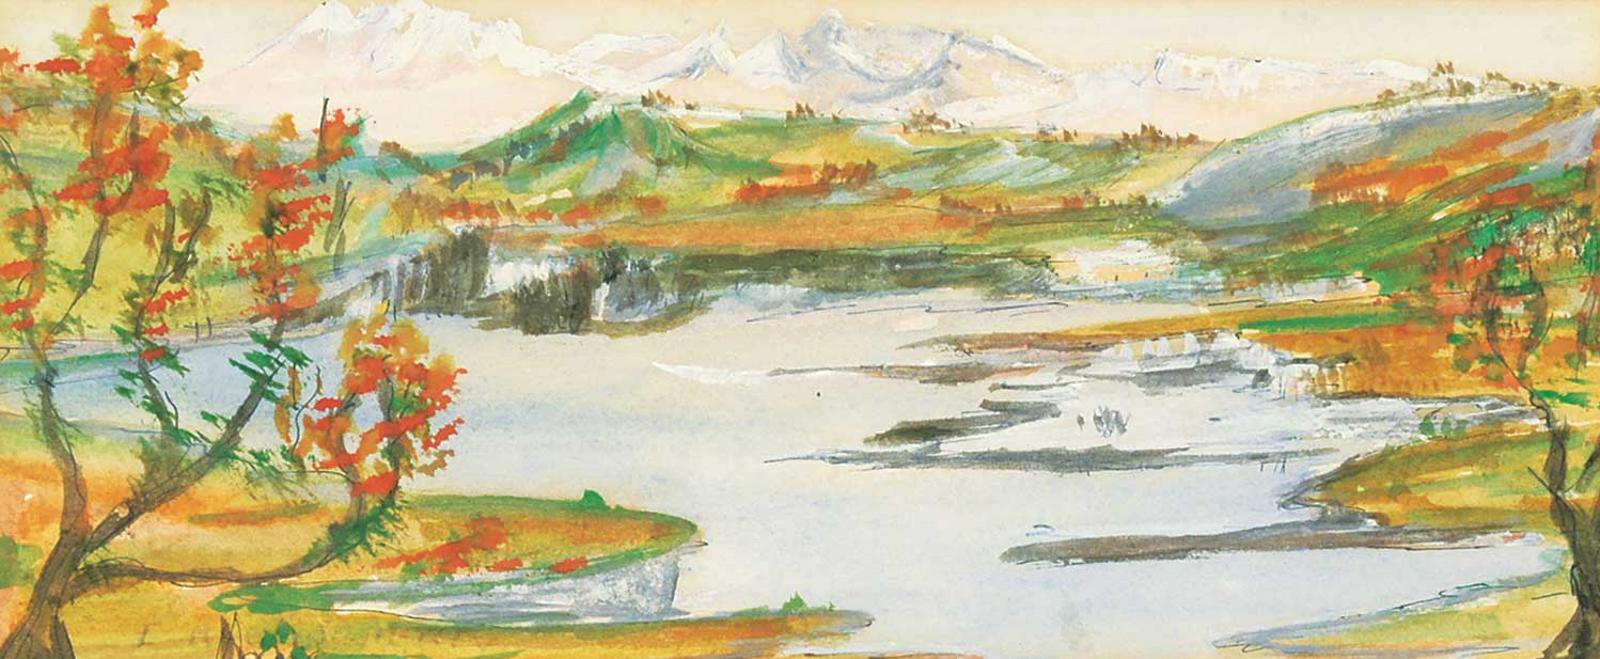 Irene E. McCaugherty (1914-1996) - Untitled - Lake Beside the Mountains